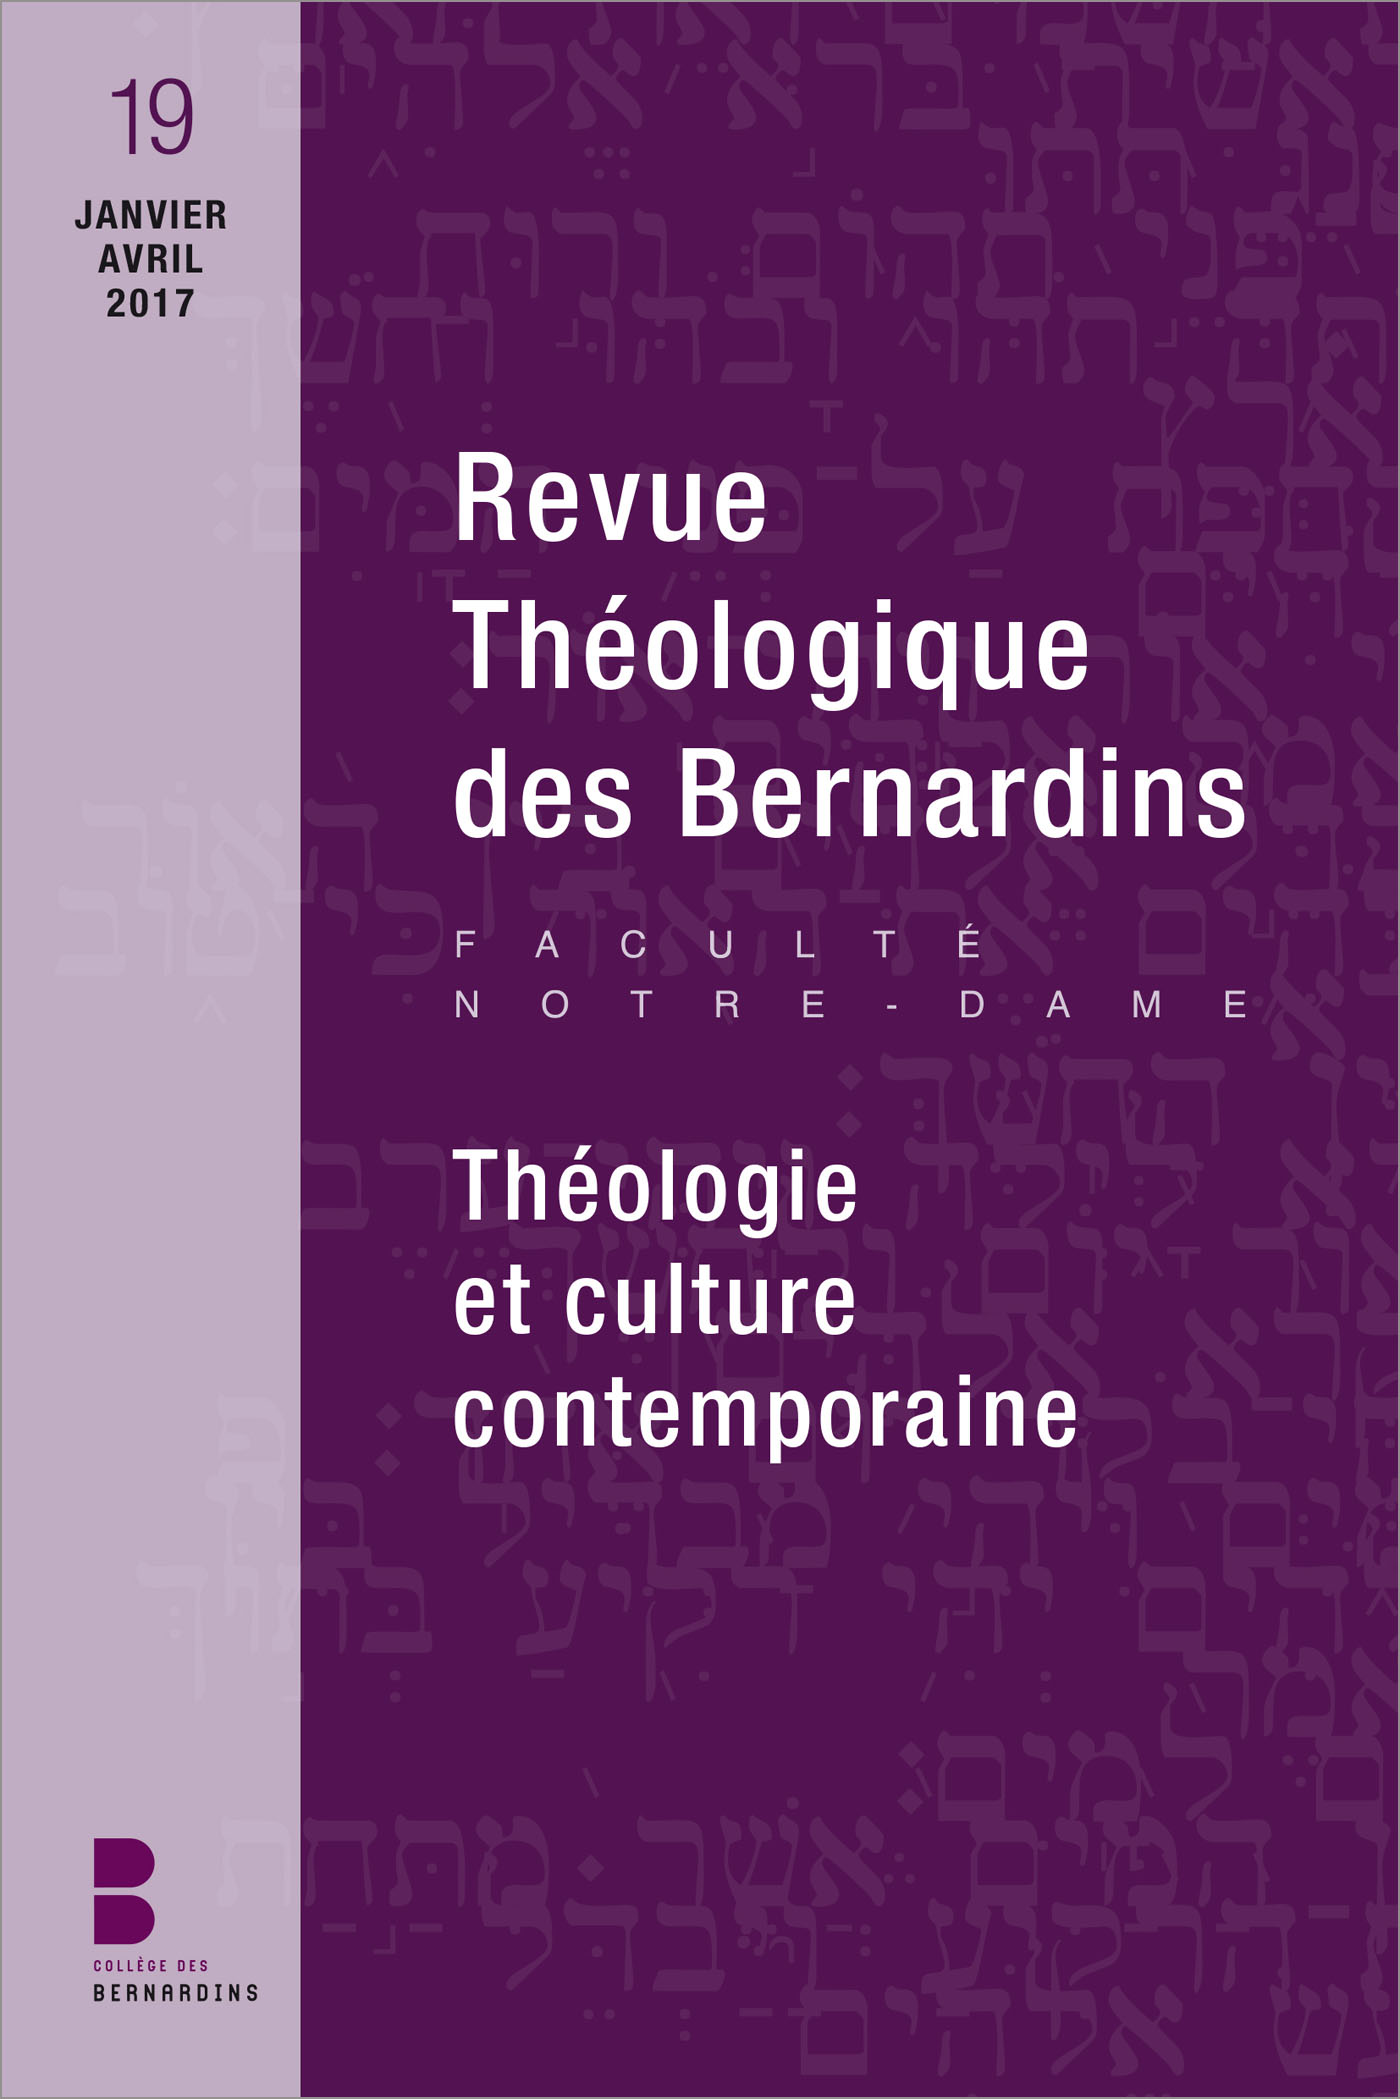 Revue Théologique des Bernardins n°19